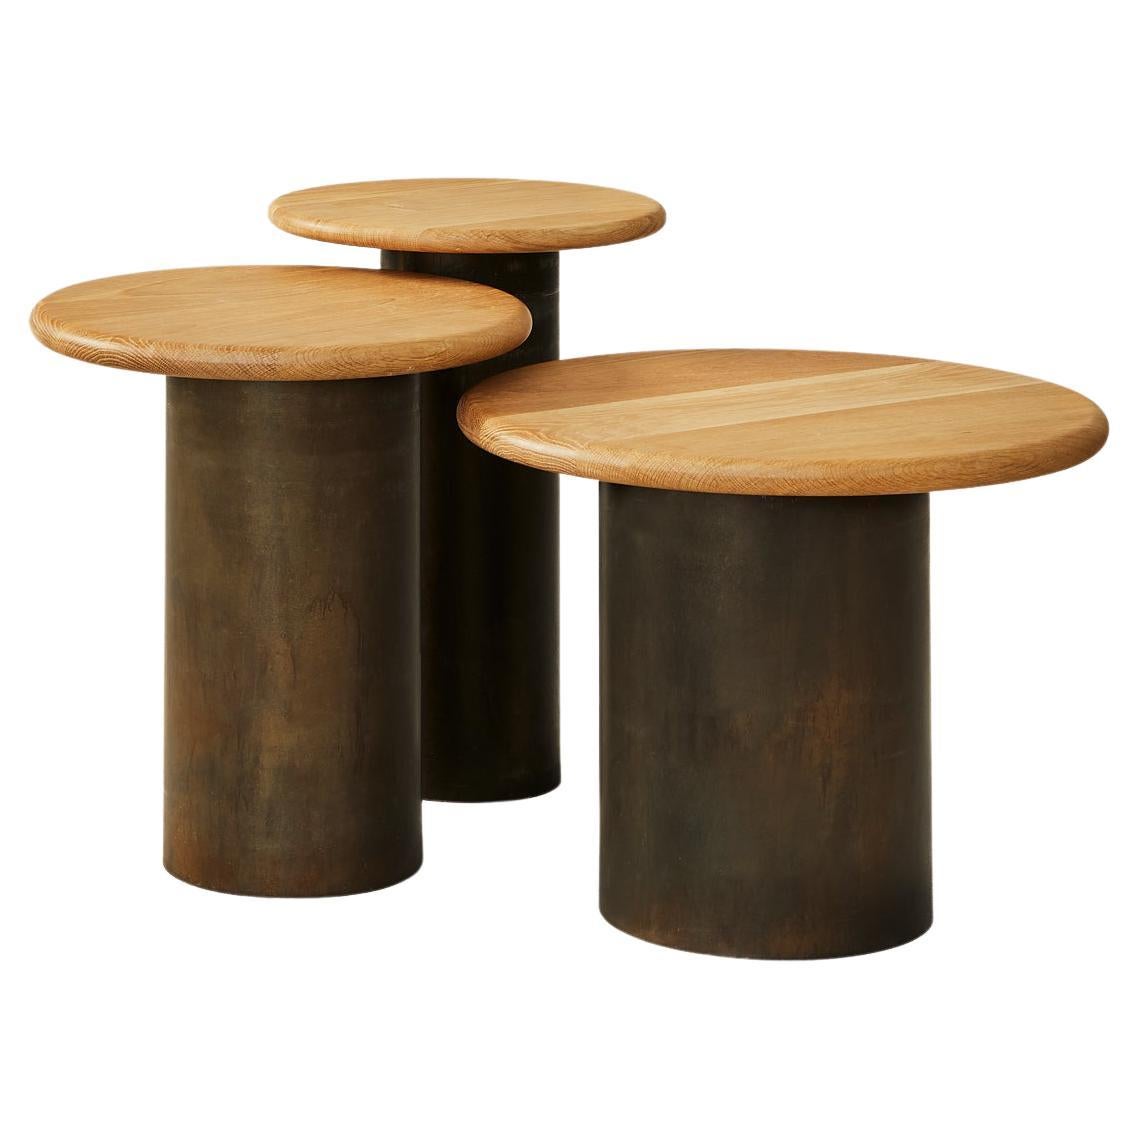 Raindrop Side Table Set, Oak / Patinated